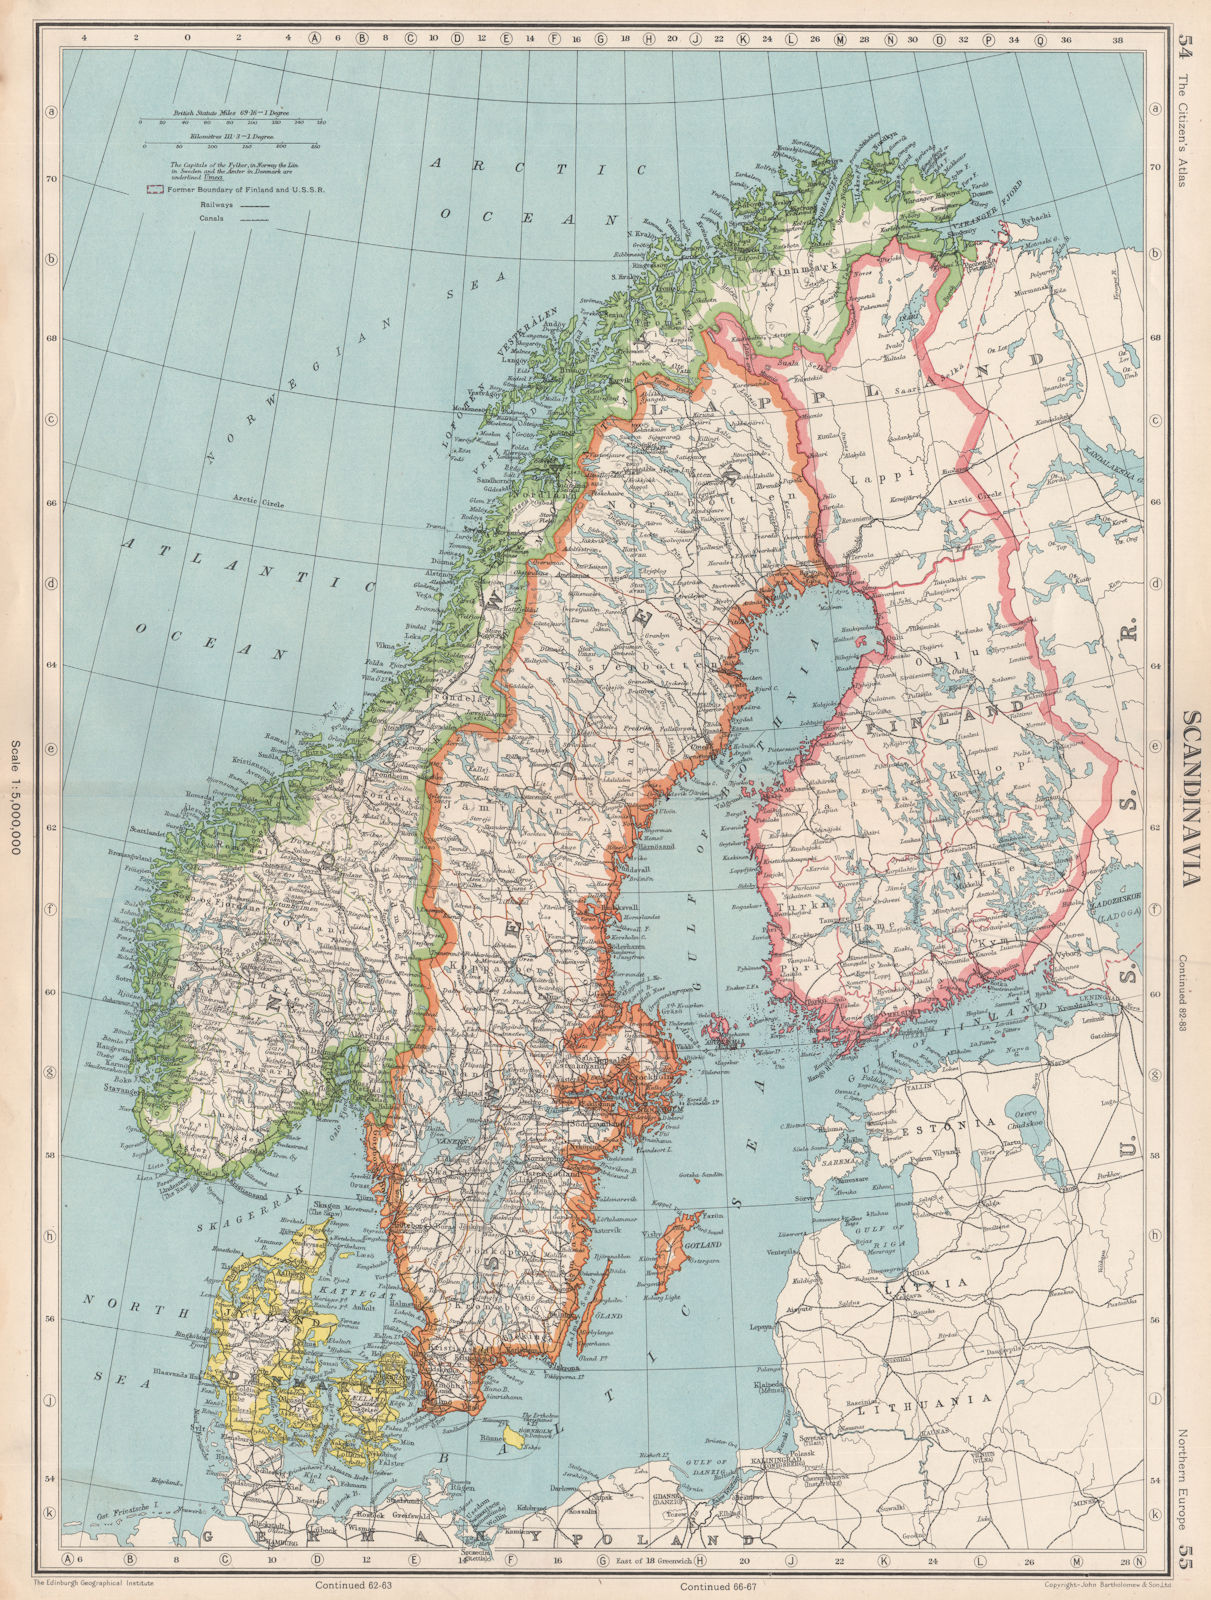 Associate Product SCANDINAVIA. Sweden Norway Denmark Finland (shows < 1940 borders)  1952 map